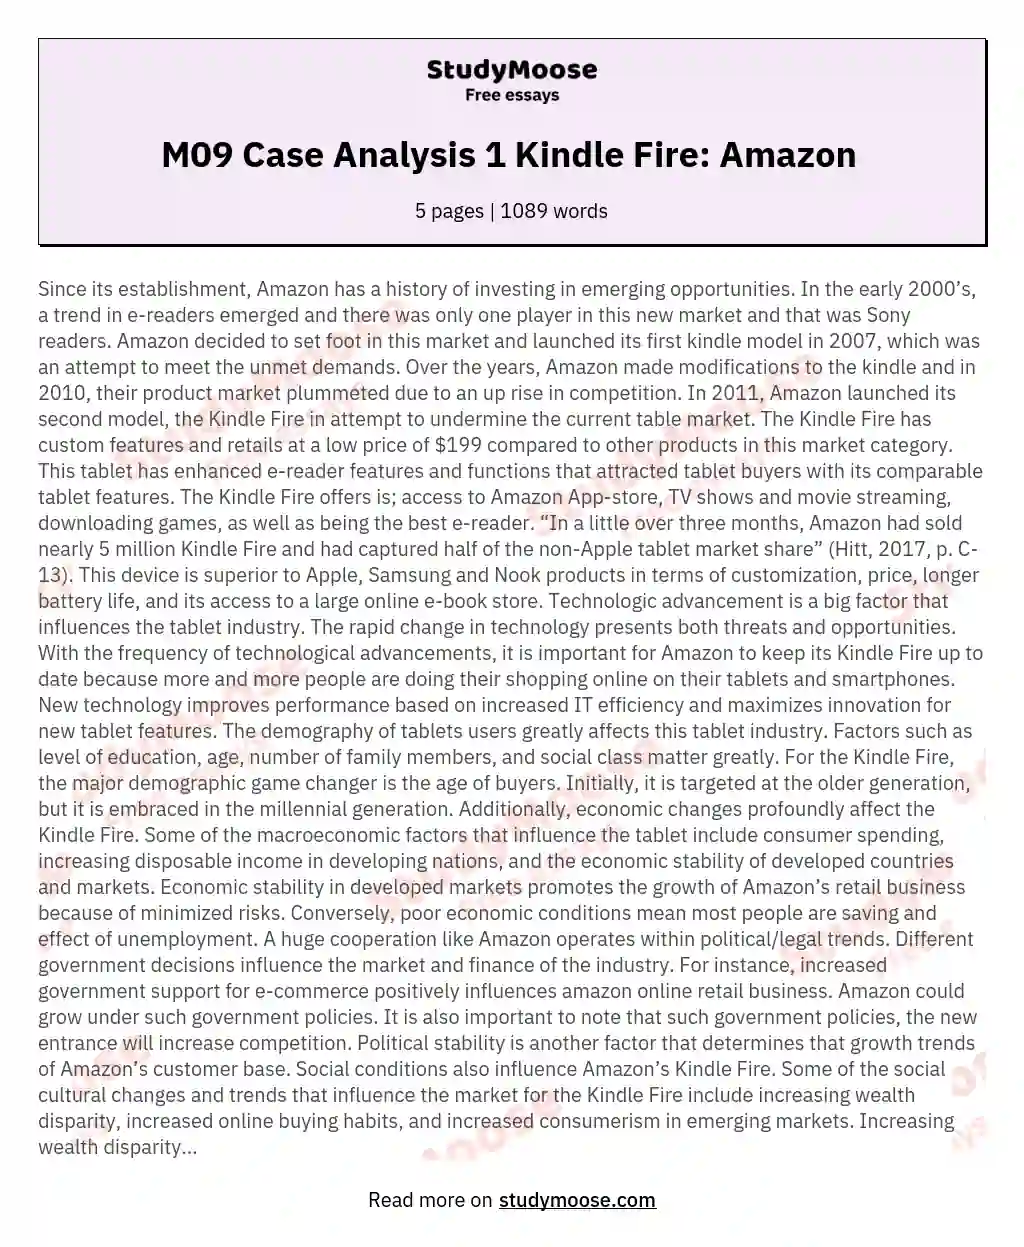 M09 Case Analysis 1 Kindle Fire: Amazon  essay